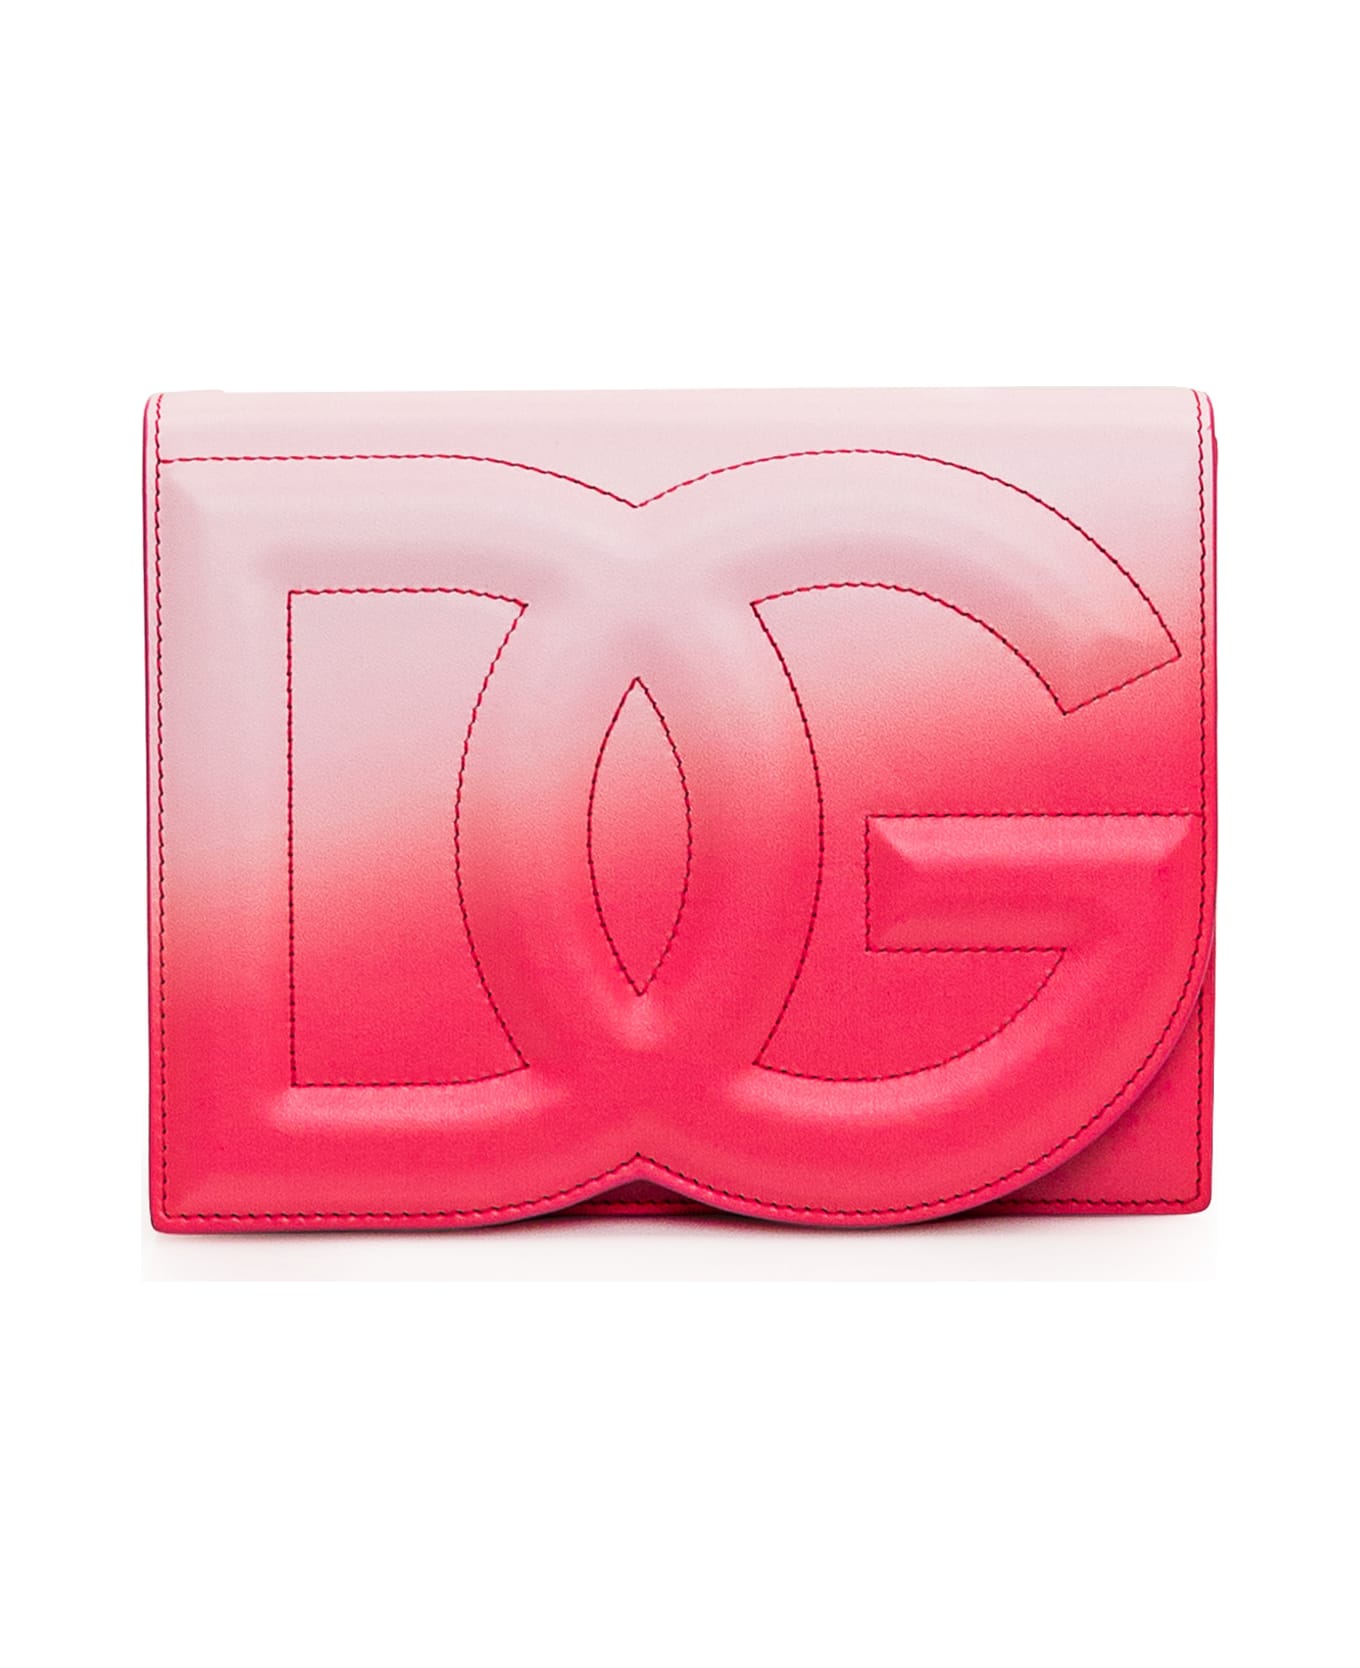 Dolce & Gabbana Leather Dg Bag